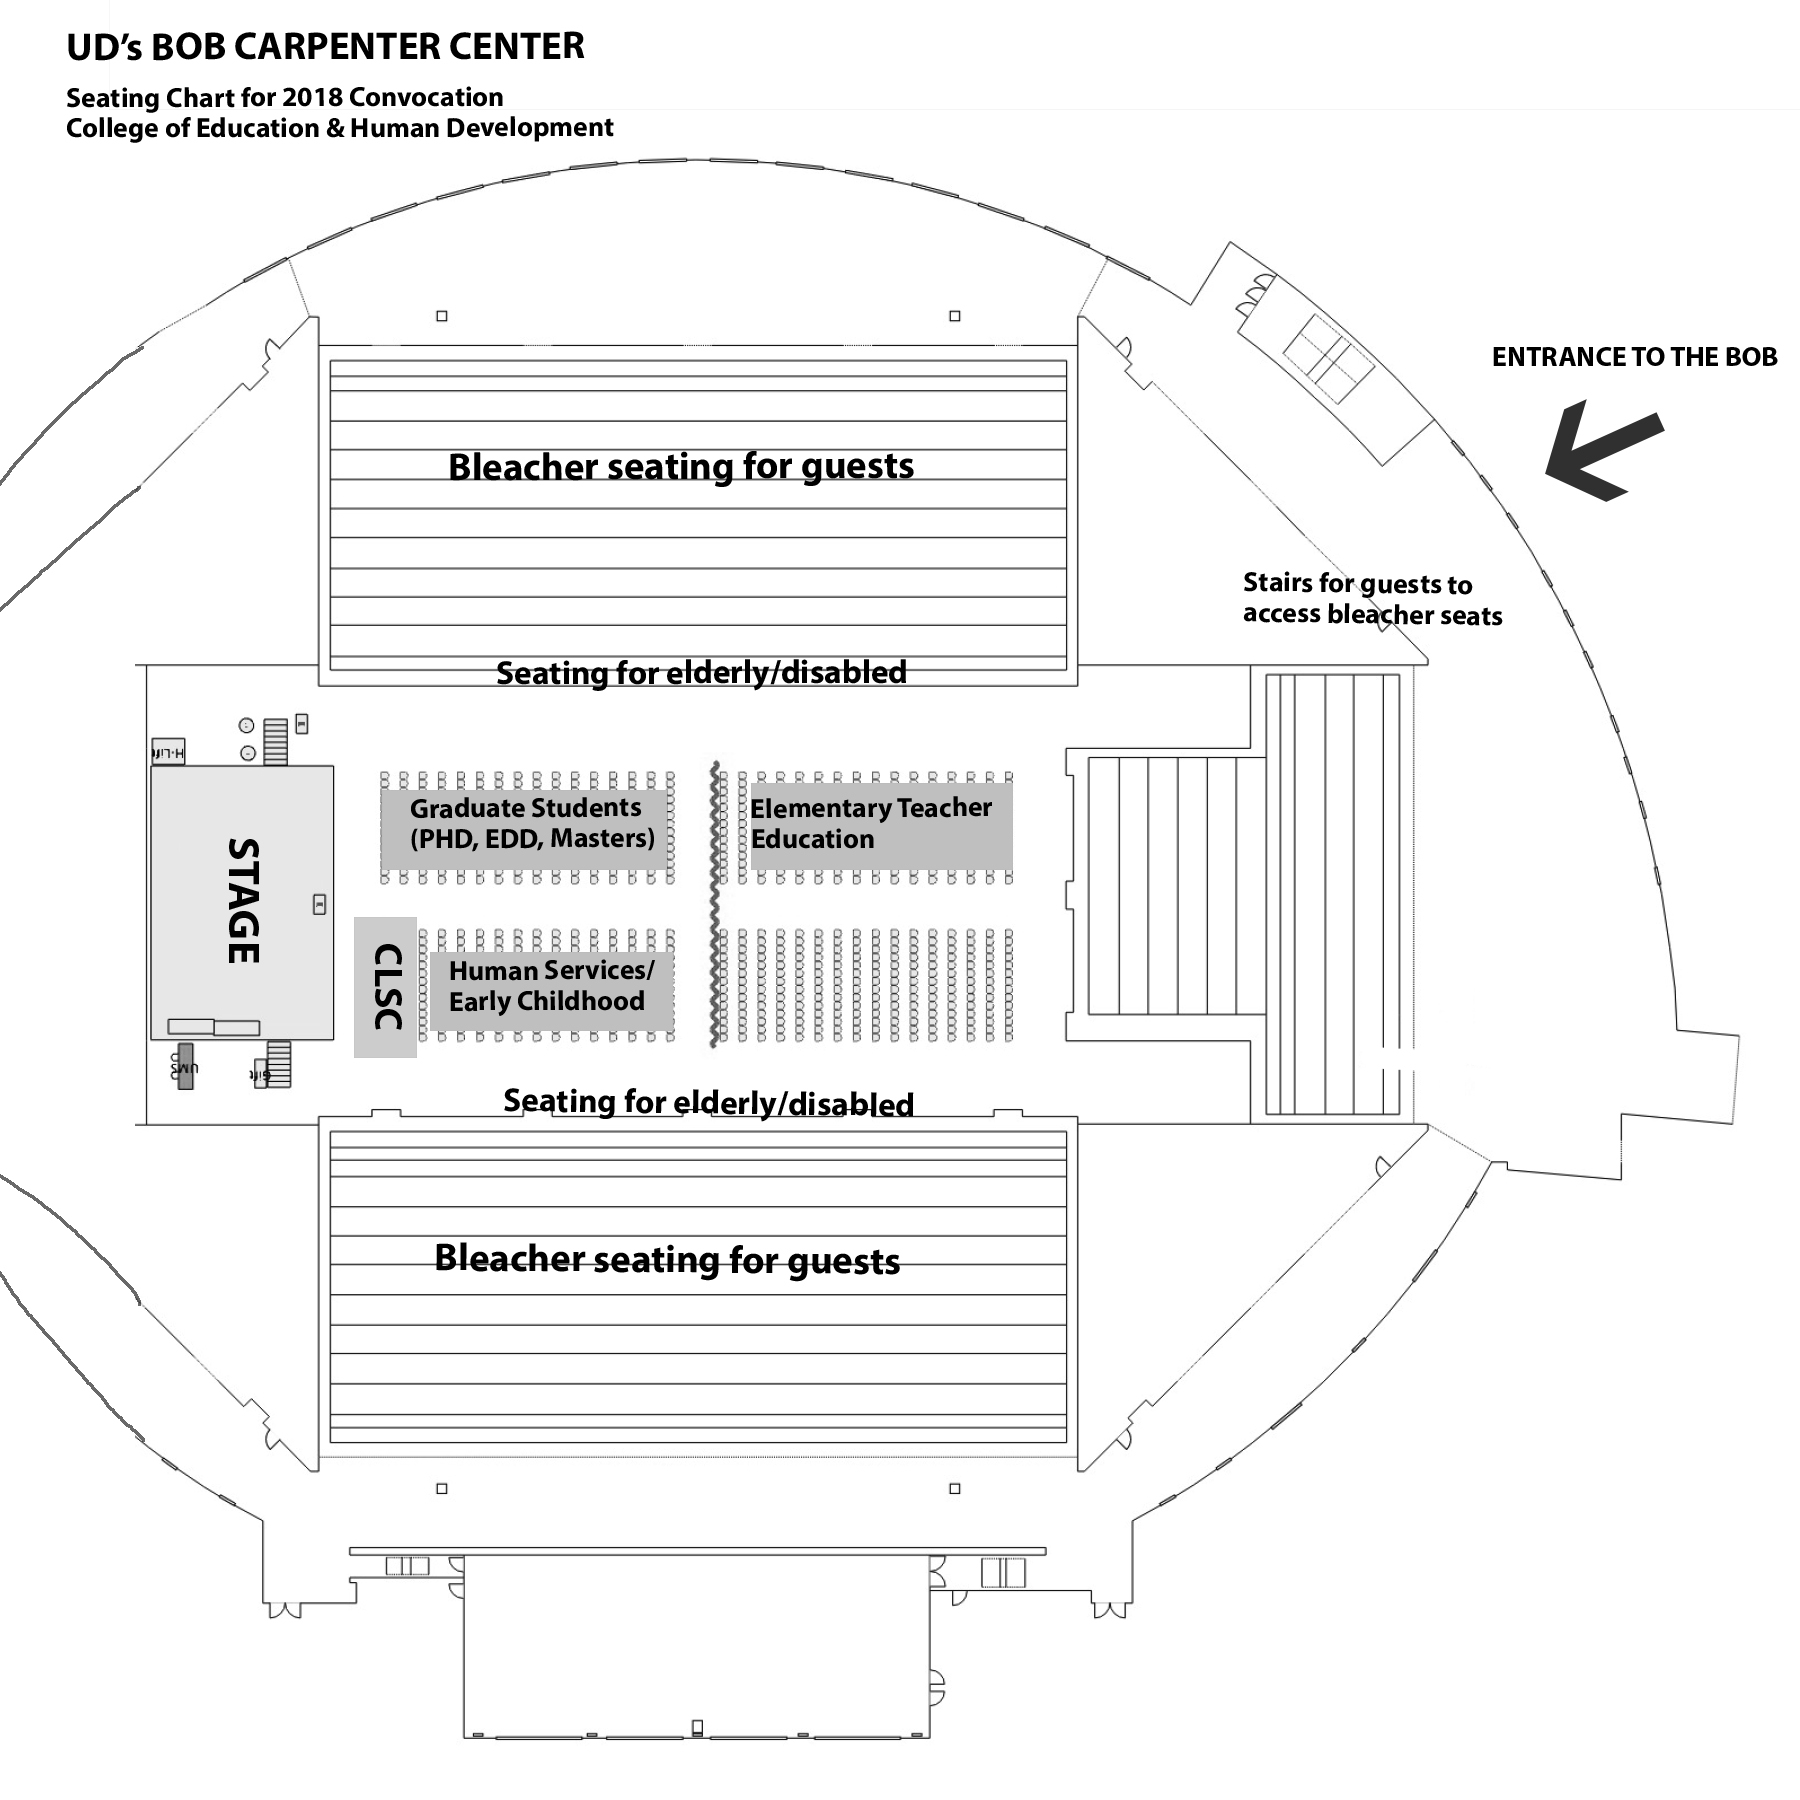 Bob Carpenter Center seating chart.